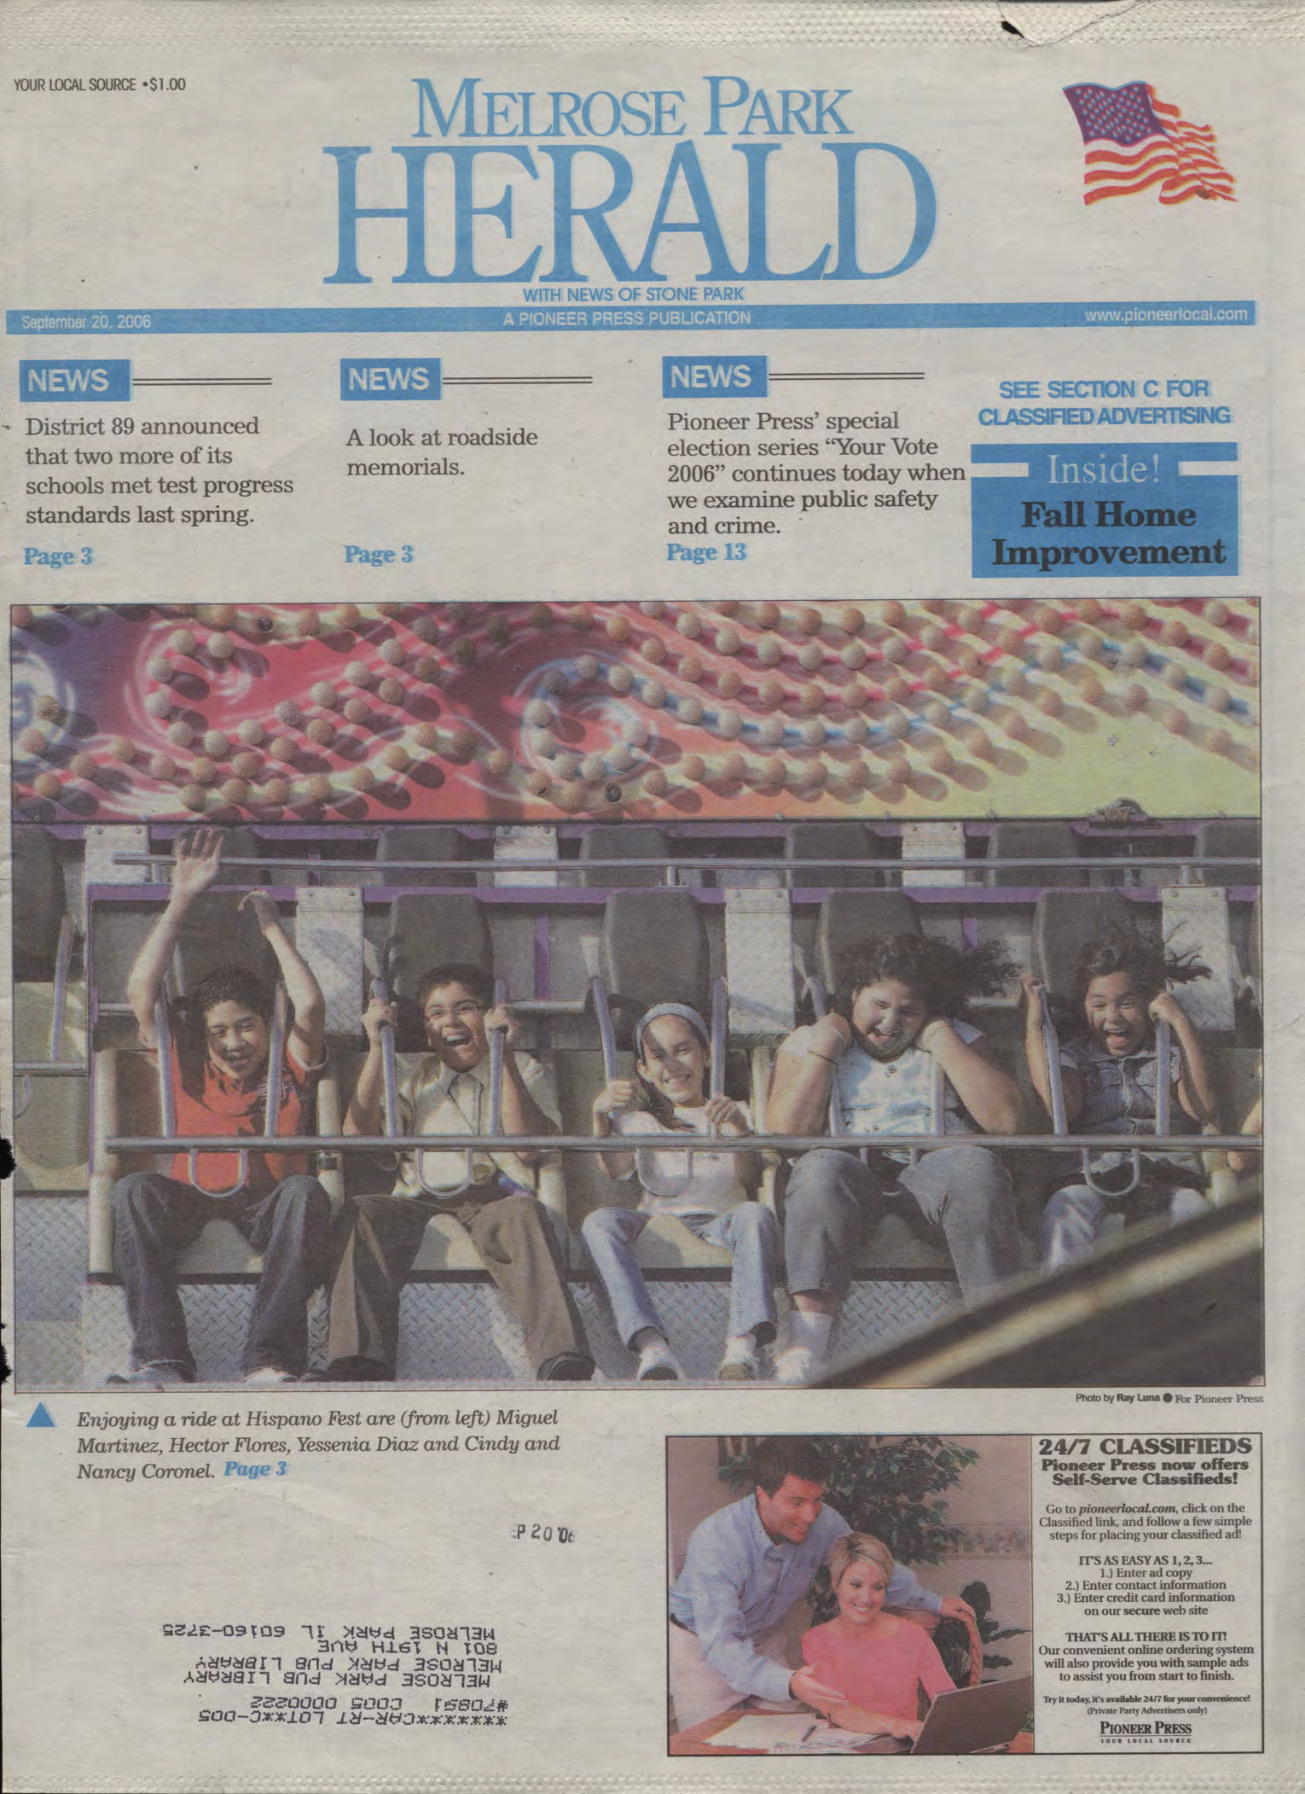 The Herald – 20060920